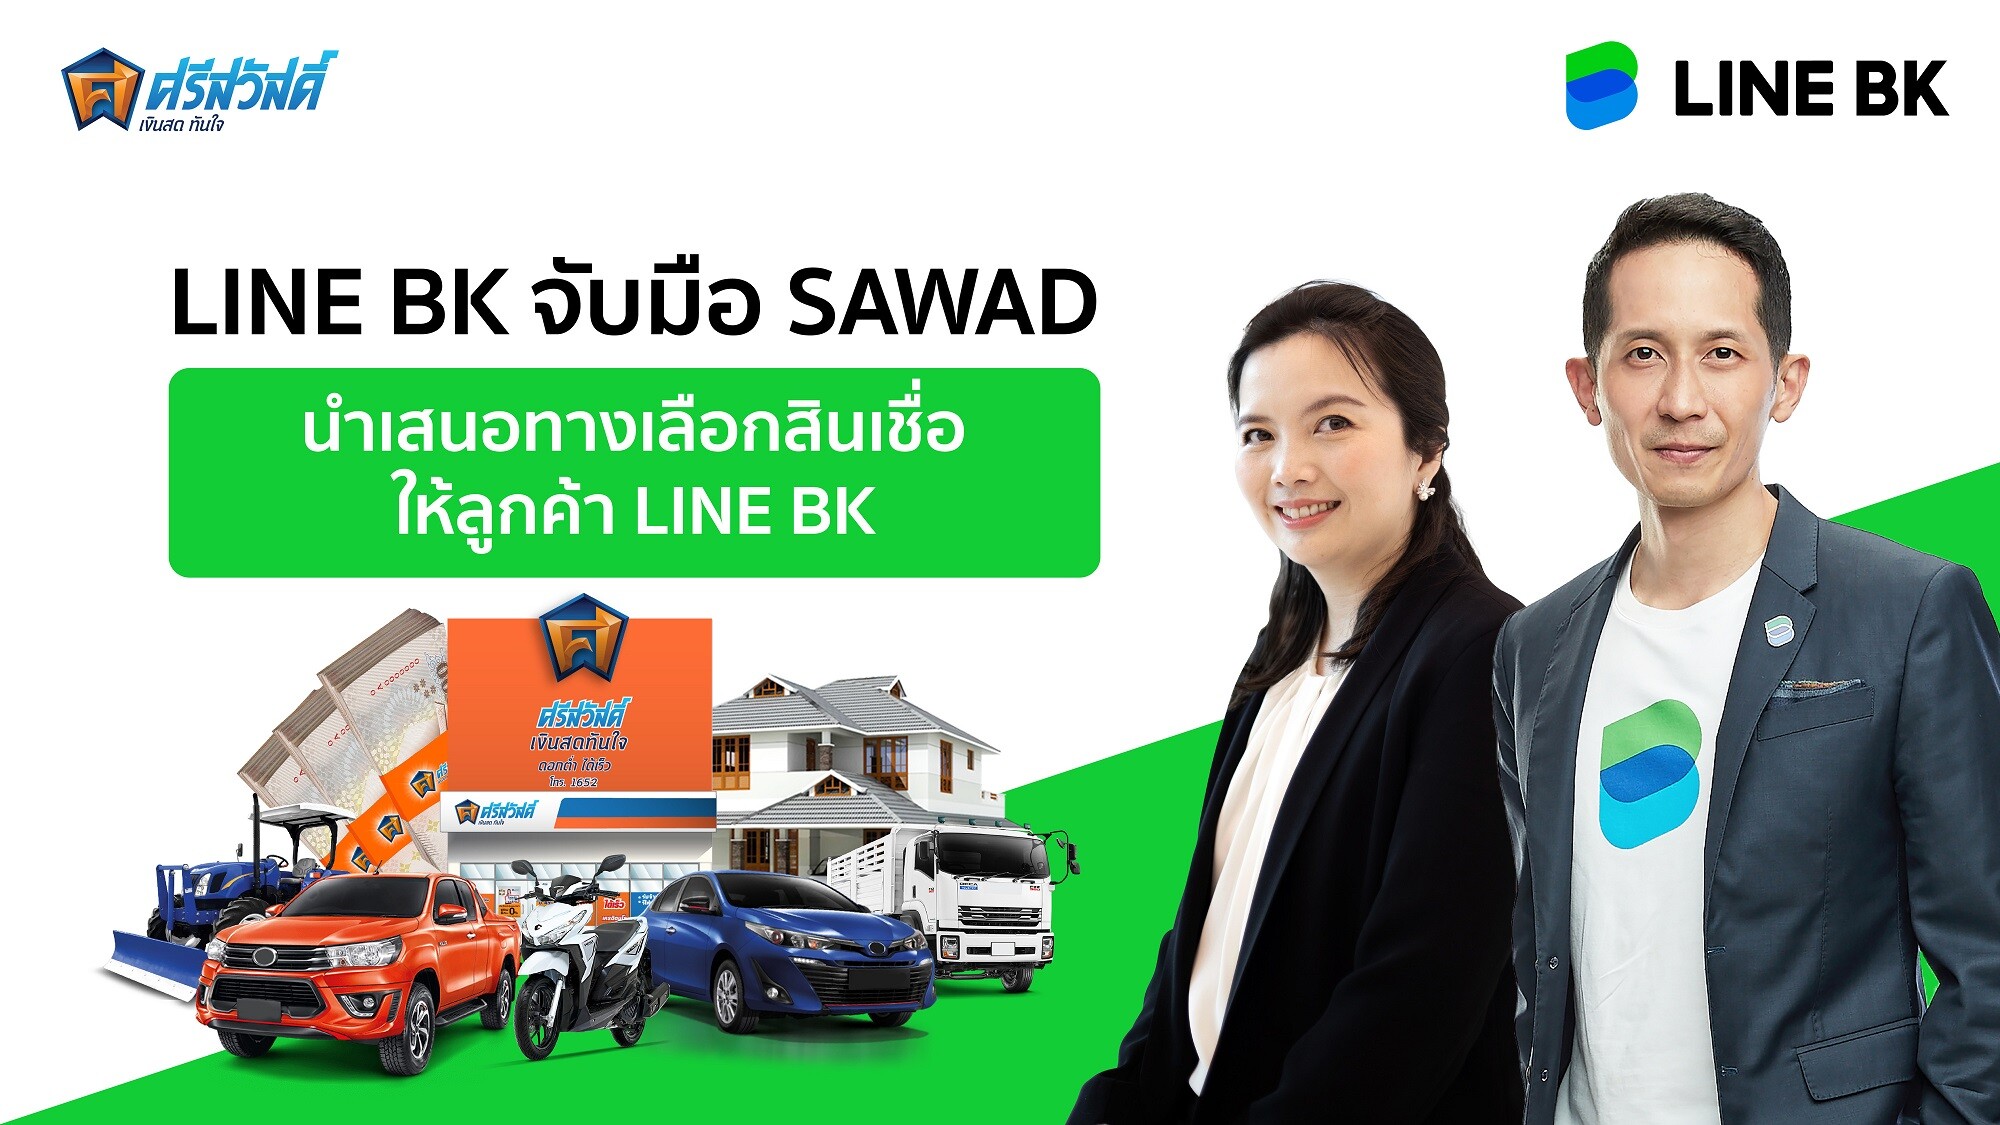 LINE BK จับมือ ศรีสวัสดิ์ นำเสนอบริการสินเชื่อเงินด่วน เพิ่มทางเลือกในการเข้าถึงสินเชื่อให้คนไทย